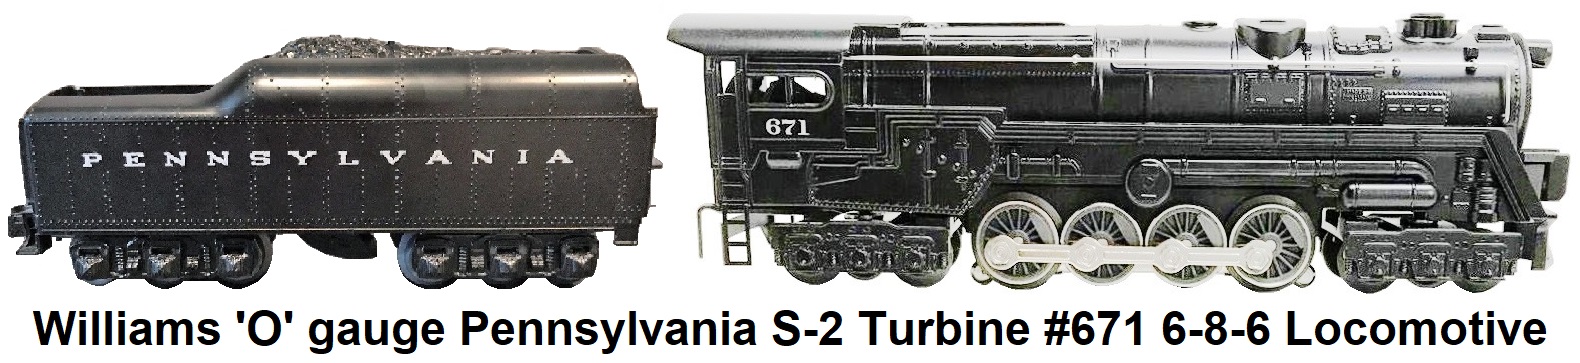 Williams 'O' gauge Pennsylvania S-2 Turbine #671 6-8-6 loco and tender circa 2000